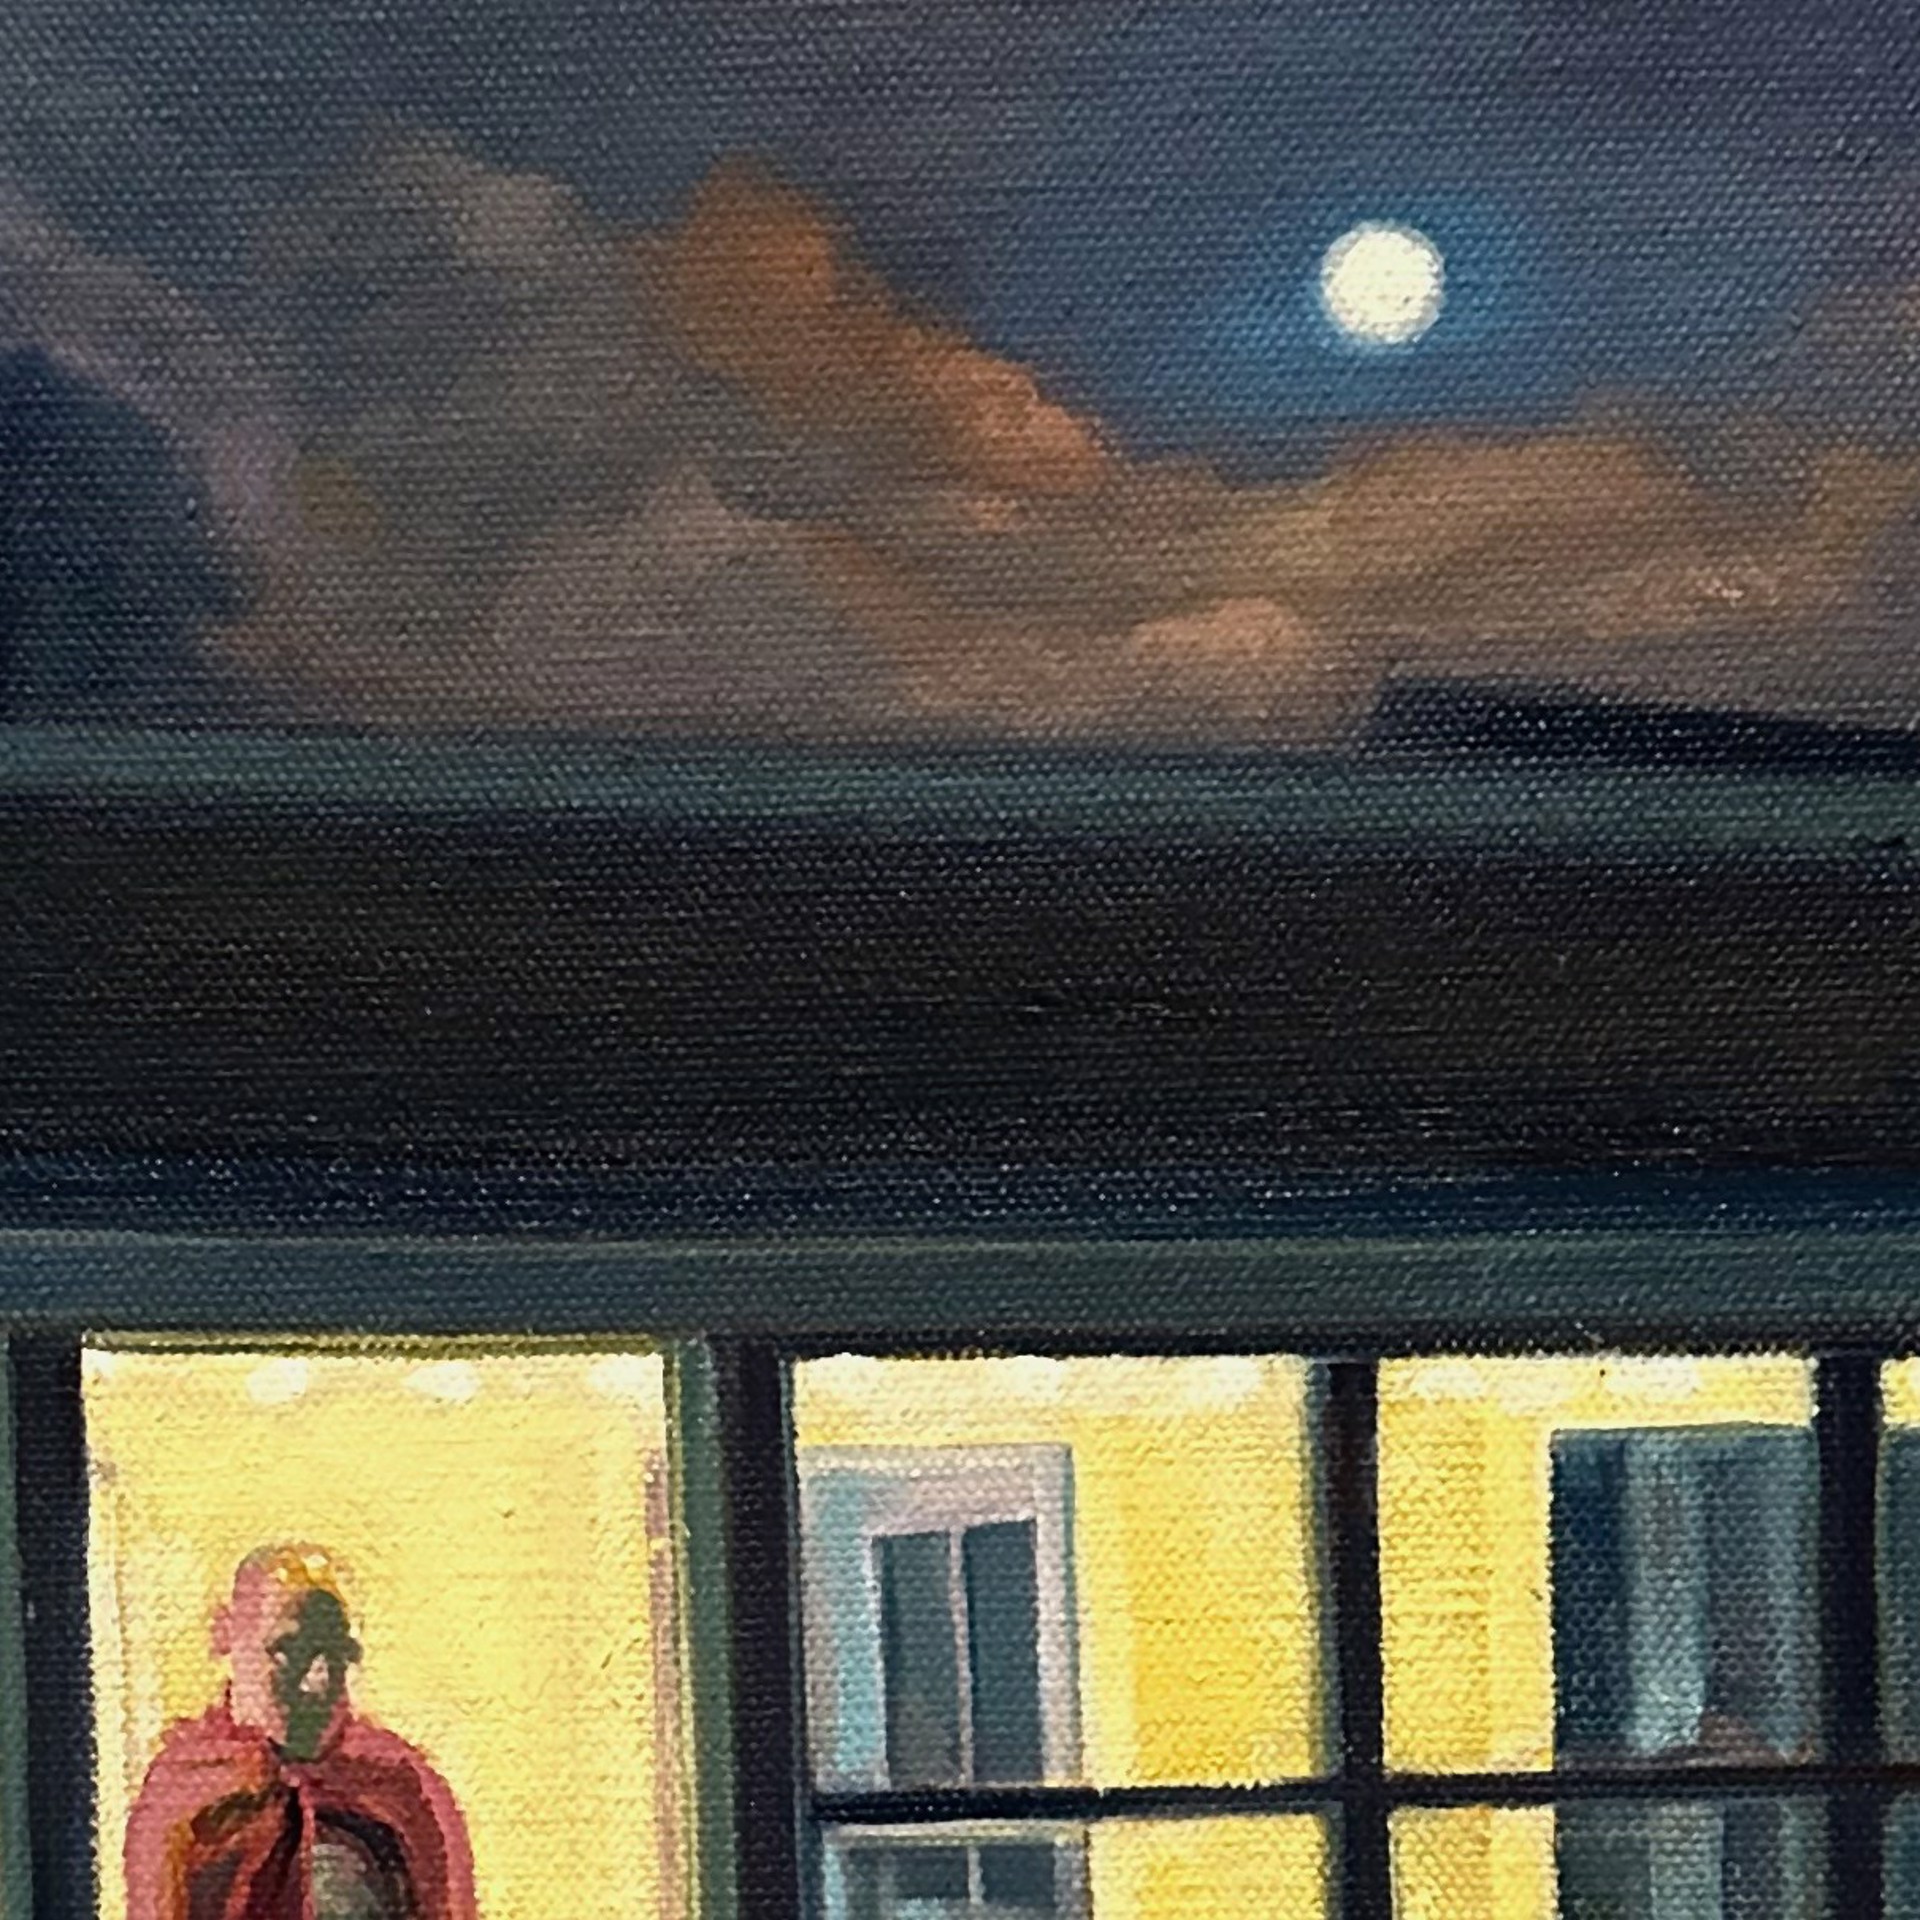 Nightmoon by Carl Grauer